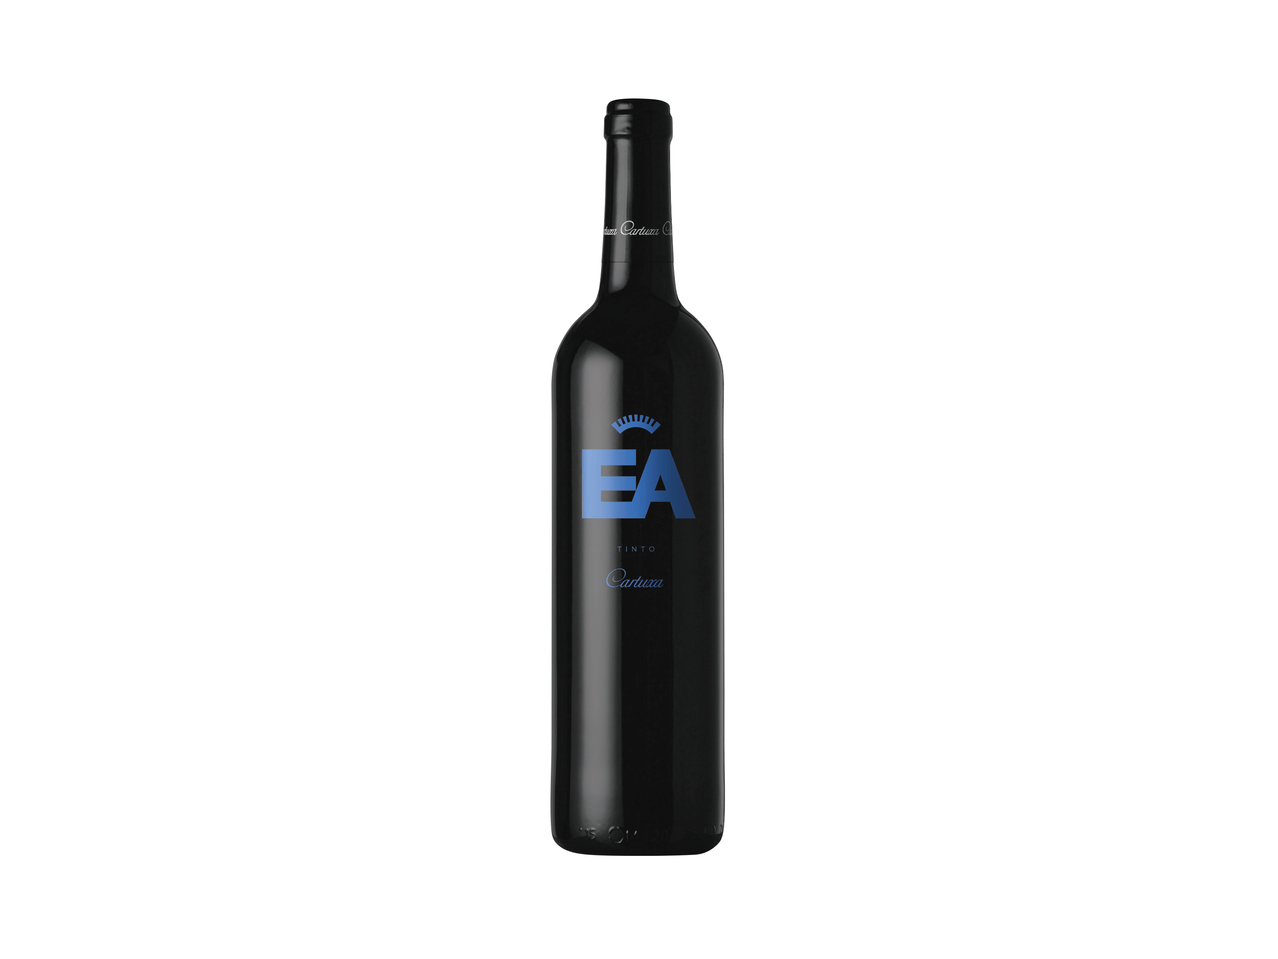 EA(R) Vinho Tinto Regional Alentejano